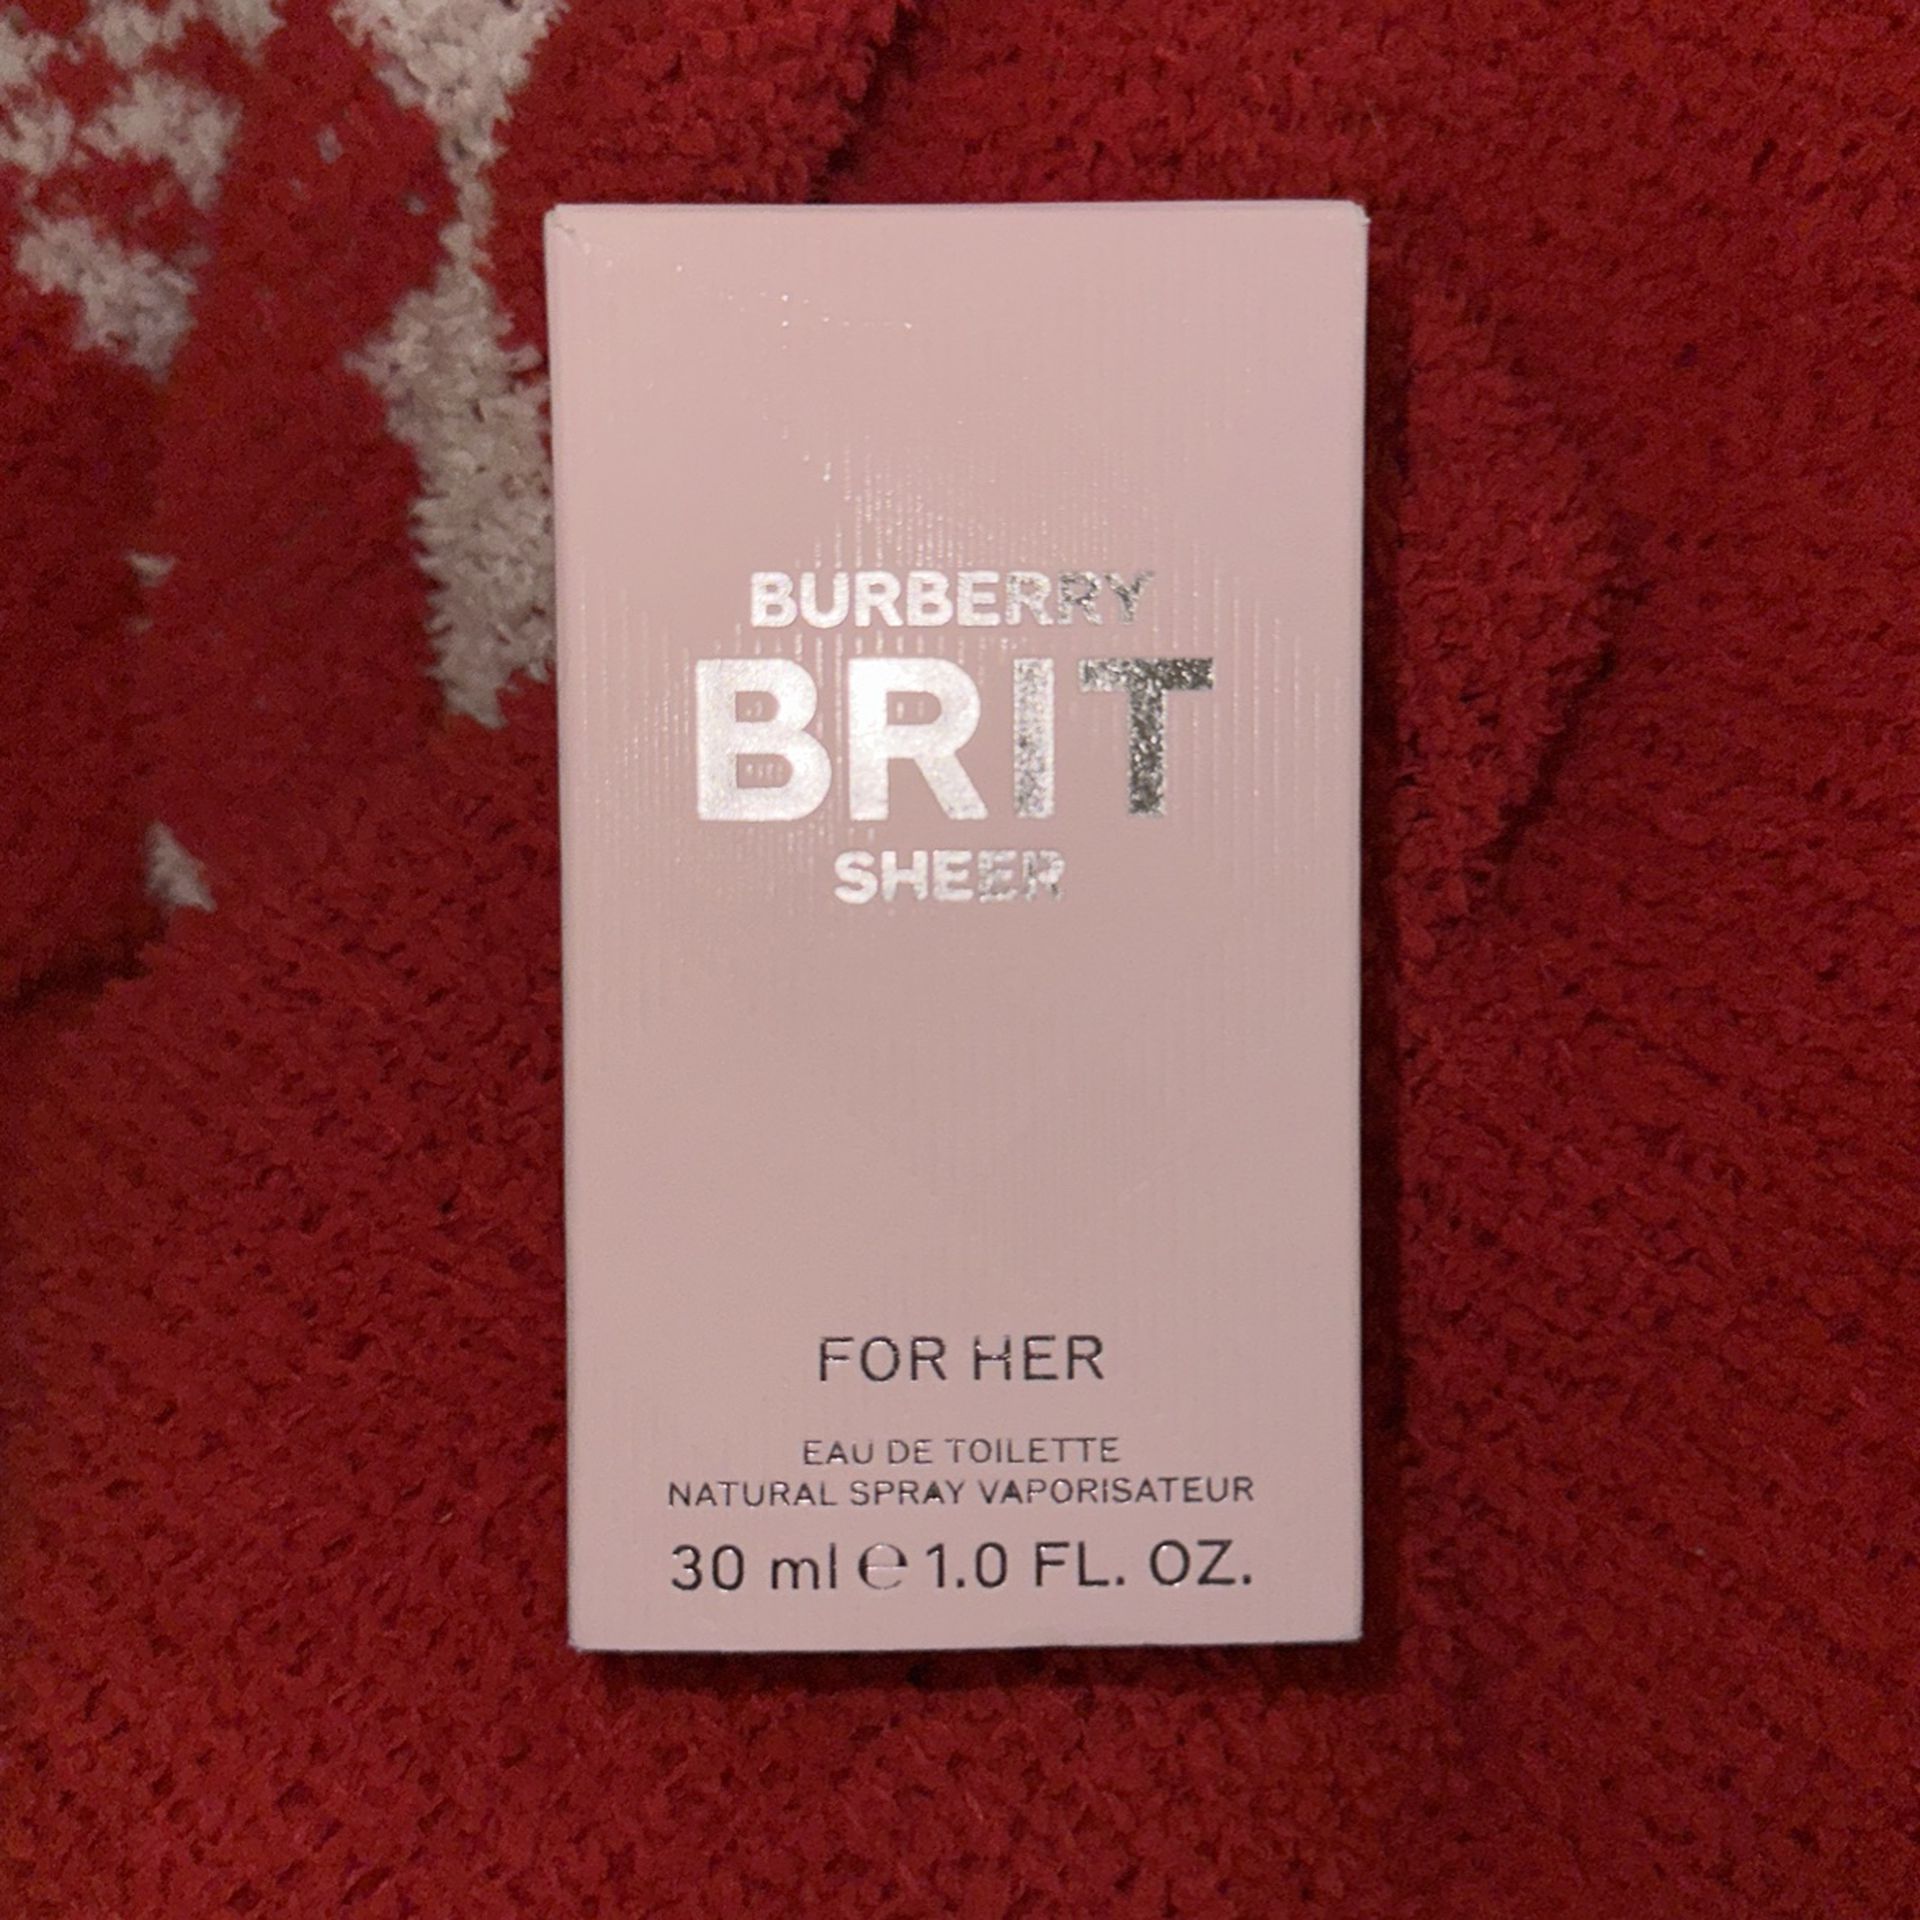 Burberry Brit , Sheer Perfume